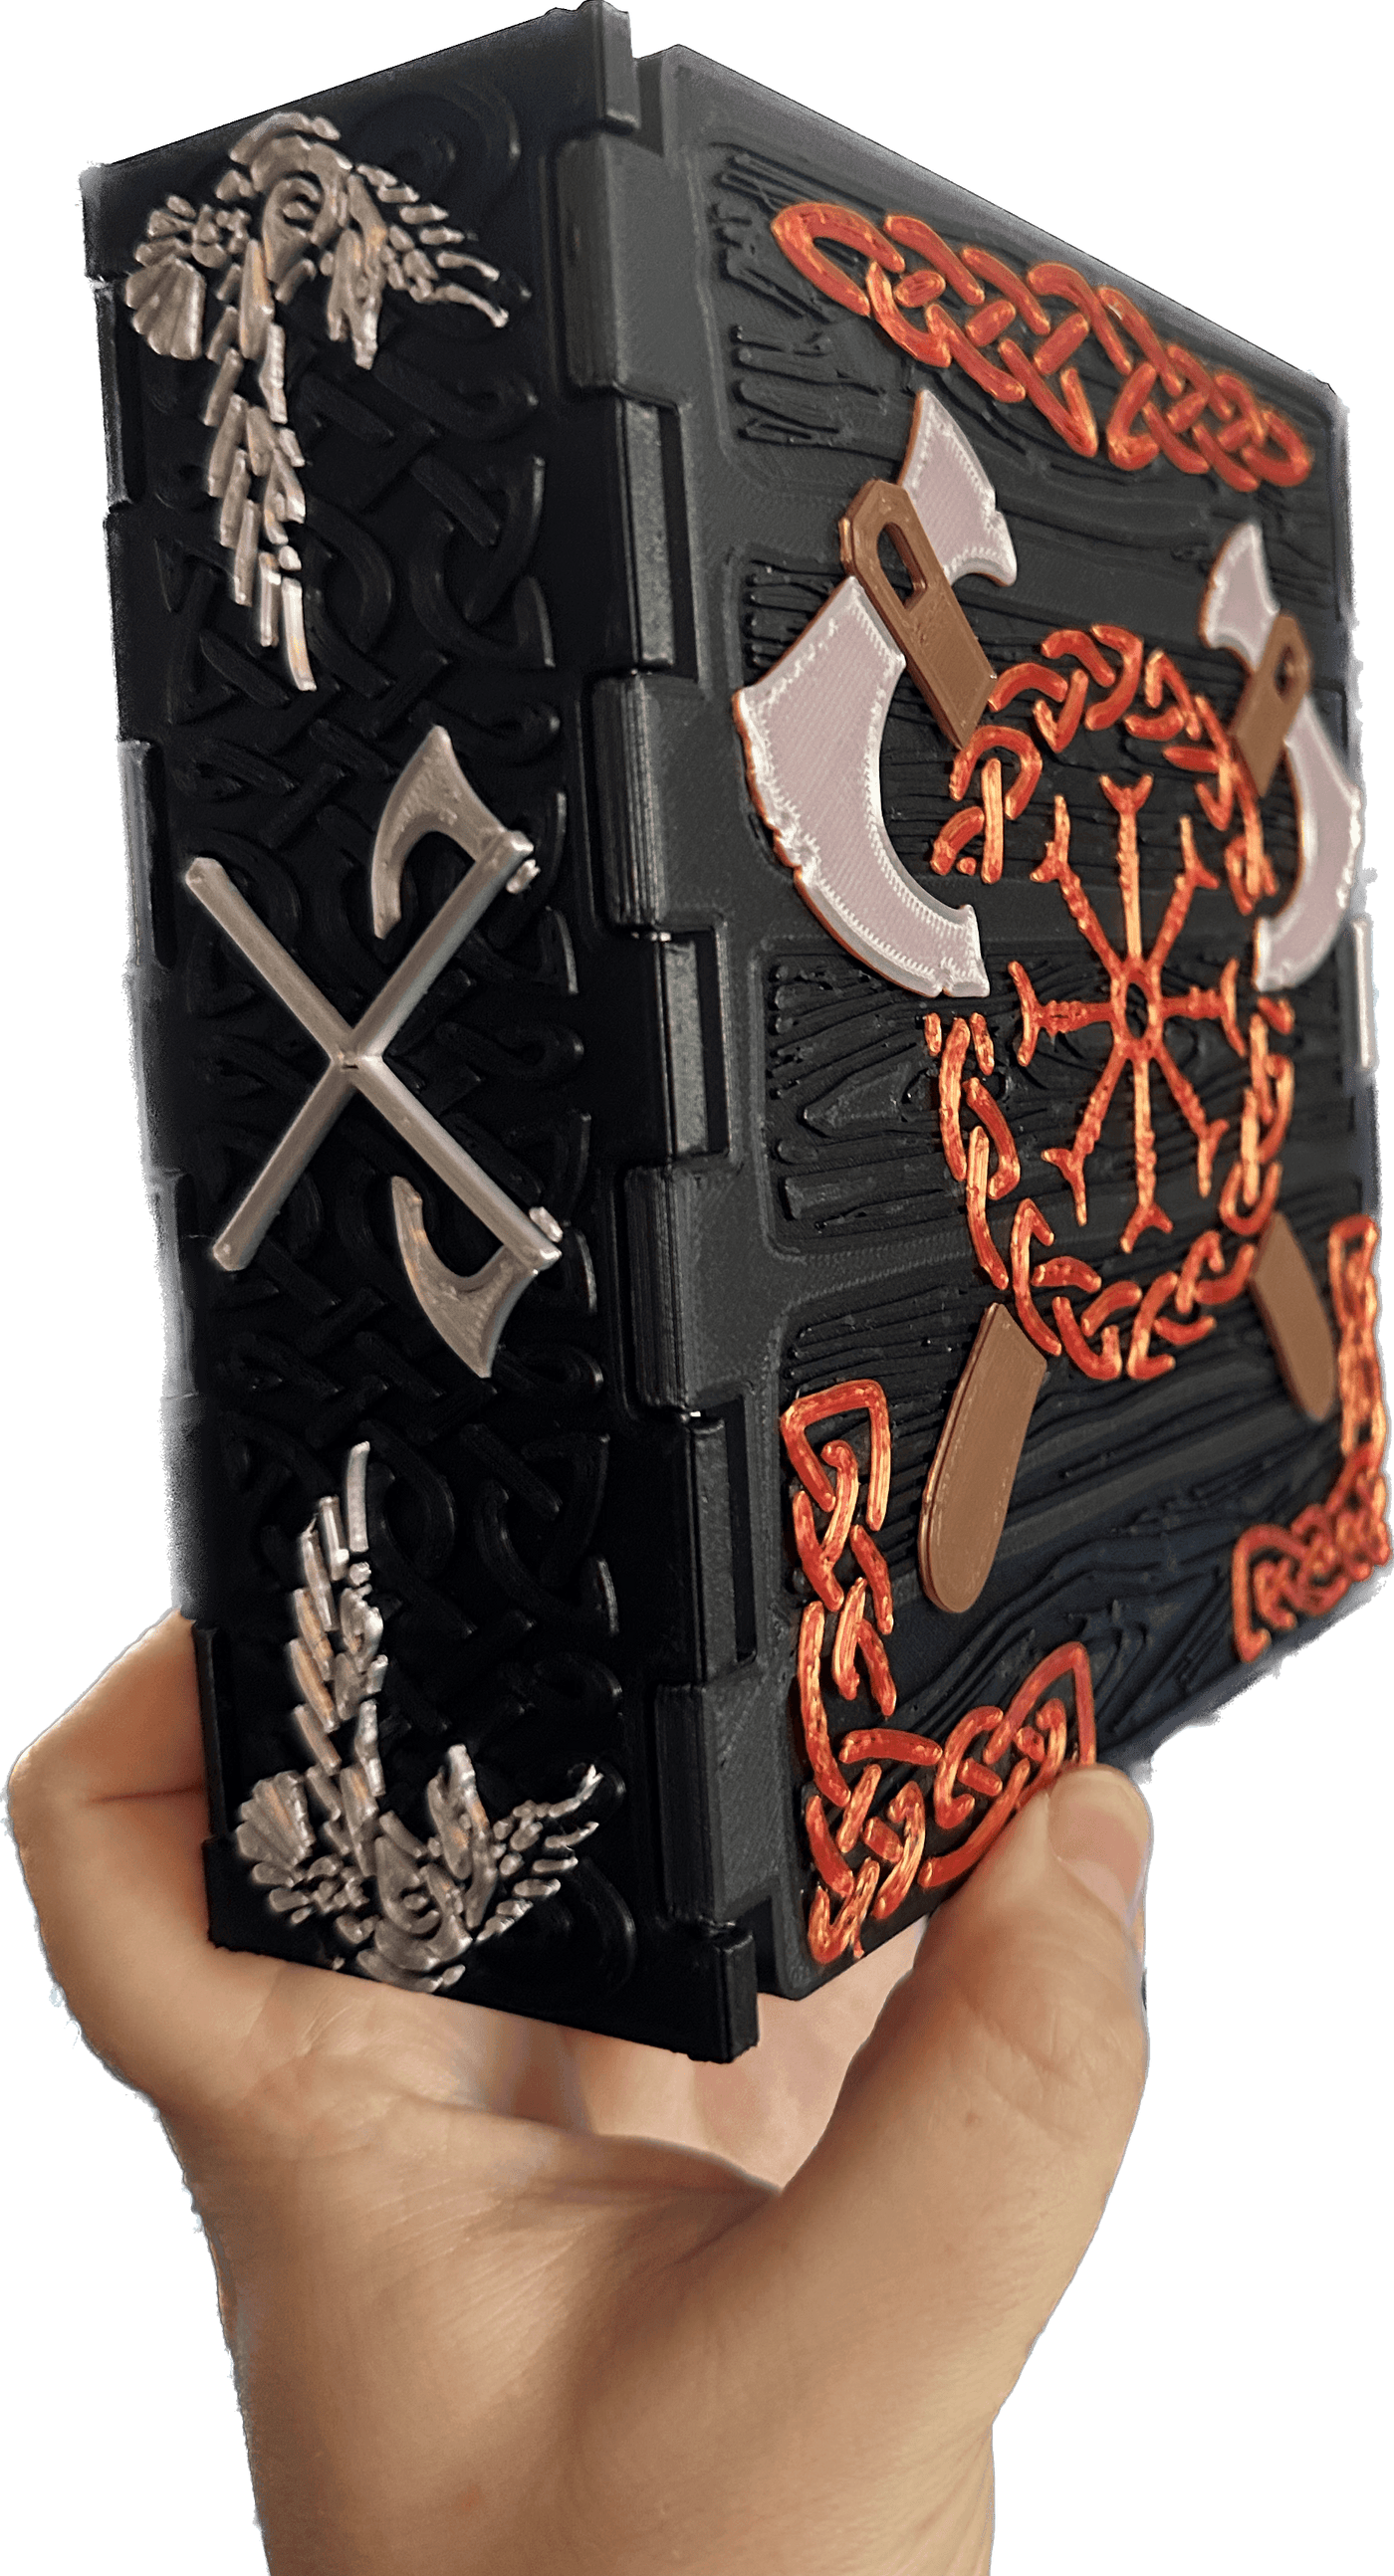 Grimoire of Many - Customisable & Personalisable TTRPG book Box - Mini Megastore